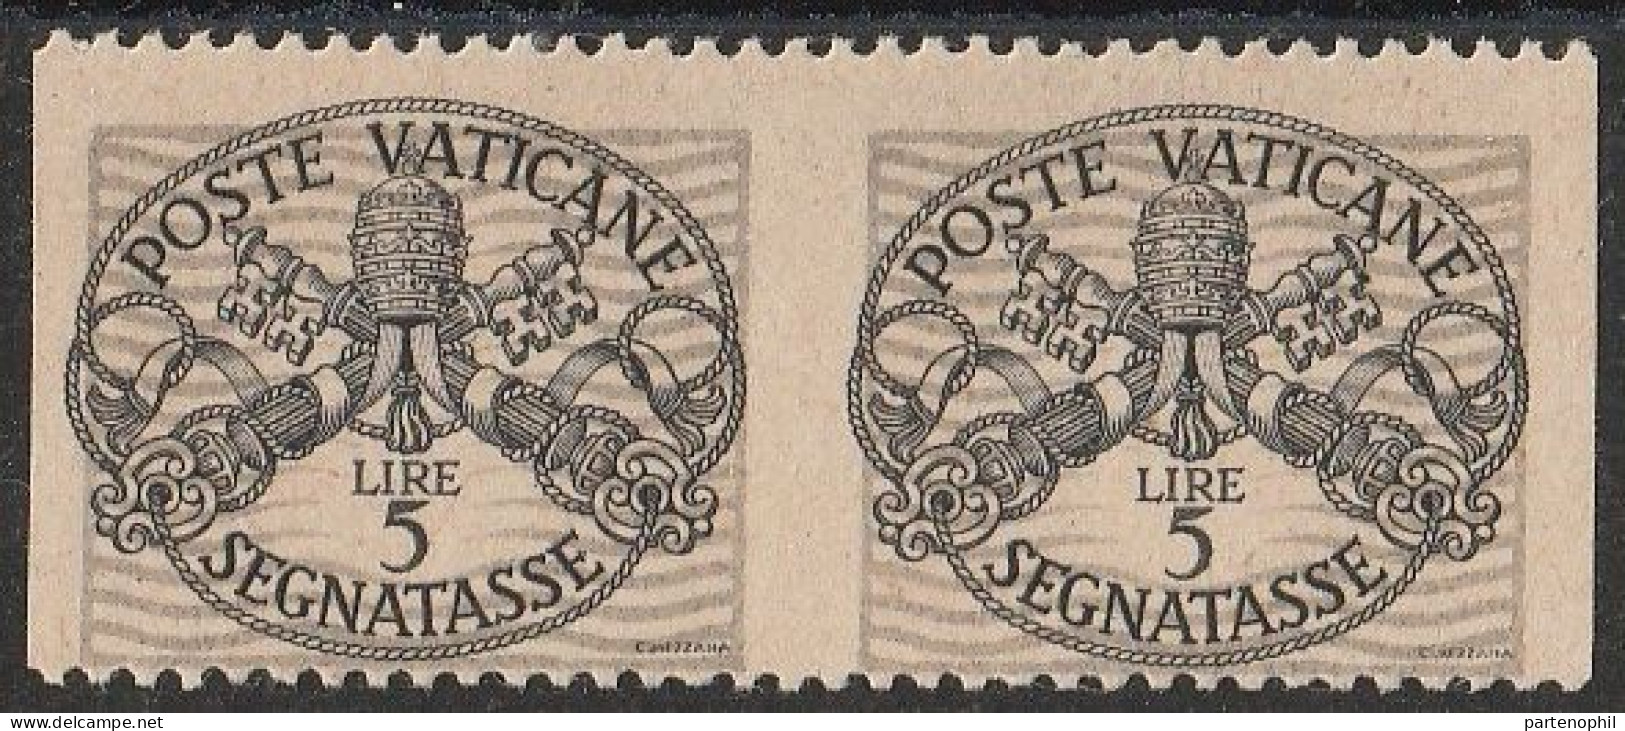 Lotto 424 Vaticano Varietà 1946 - Segnatasse Coppia Verticale Del L. 5 Non Dentellata N. 12c. MH - Variedades & Curiosidades